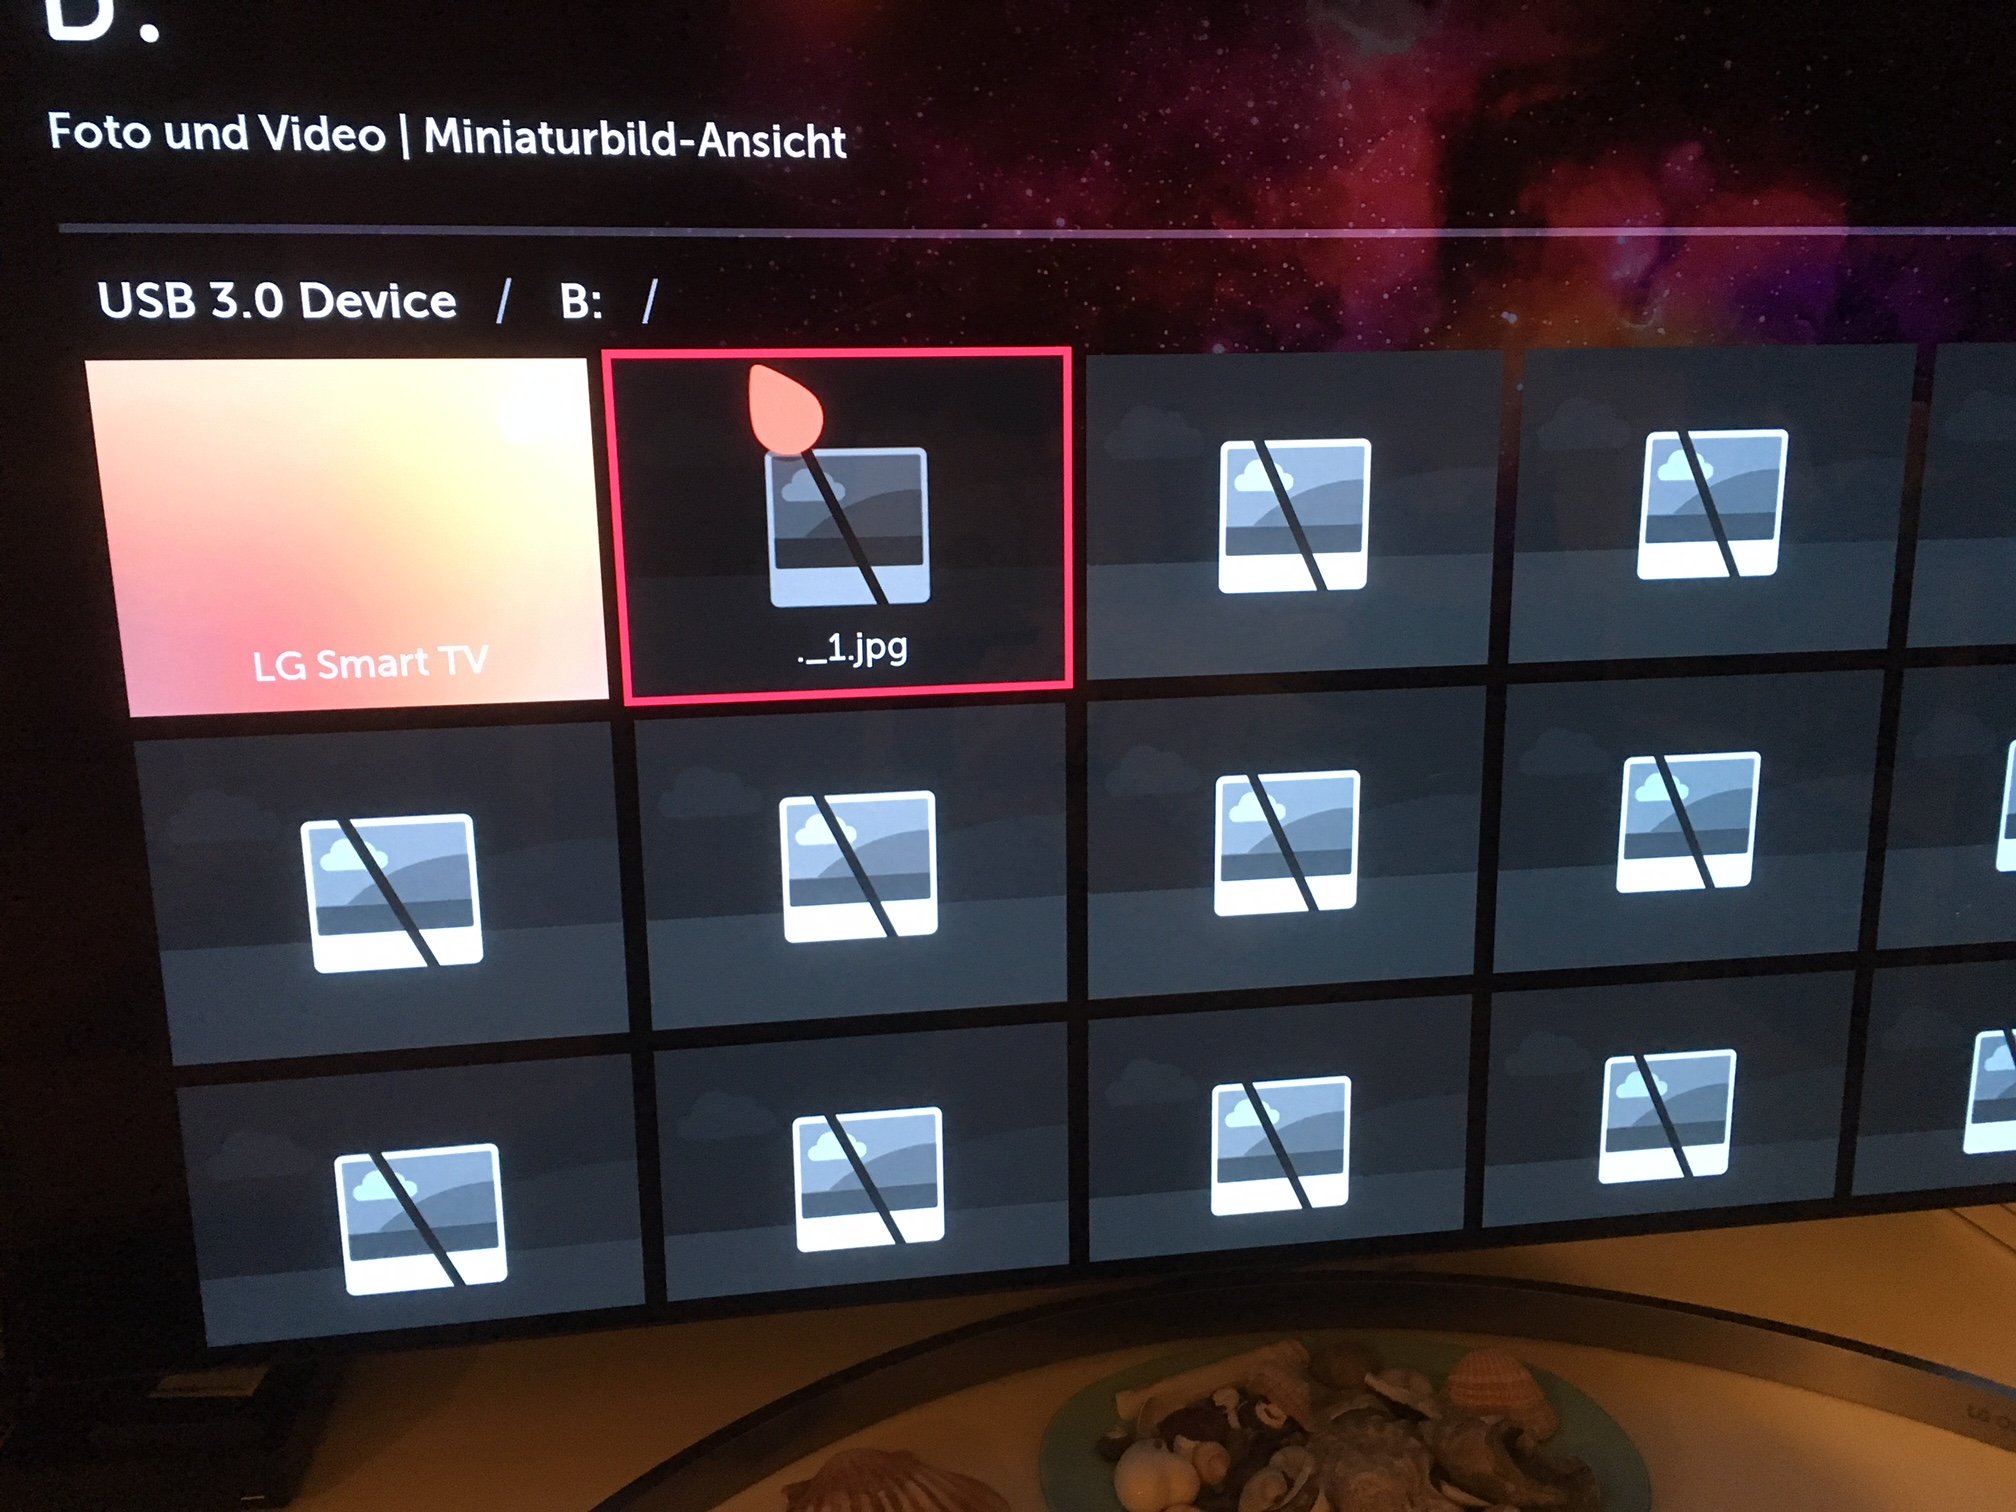 files USB device shown as - LG webOS Smart TV - LG webOS